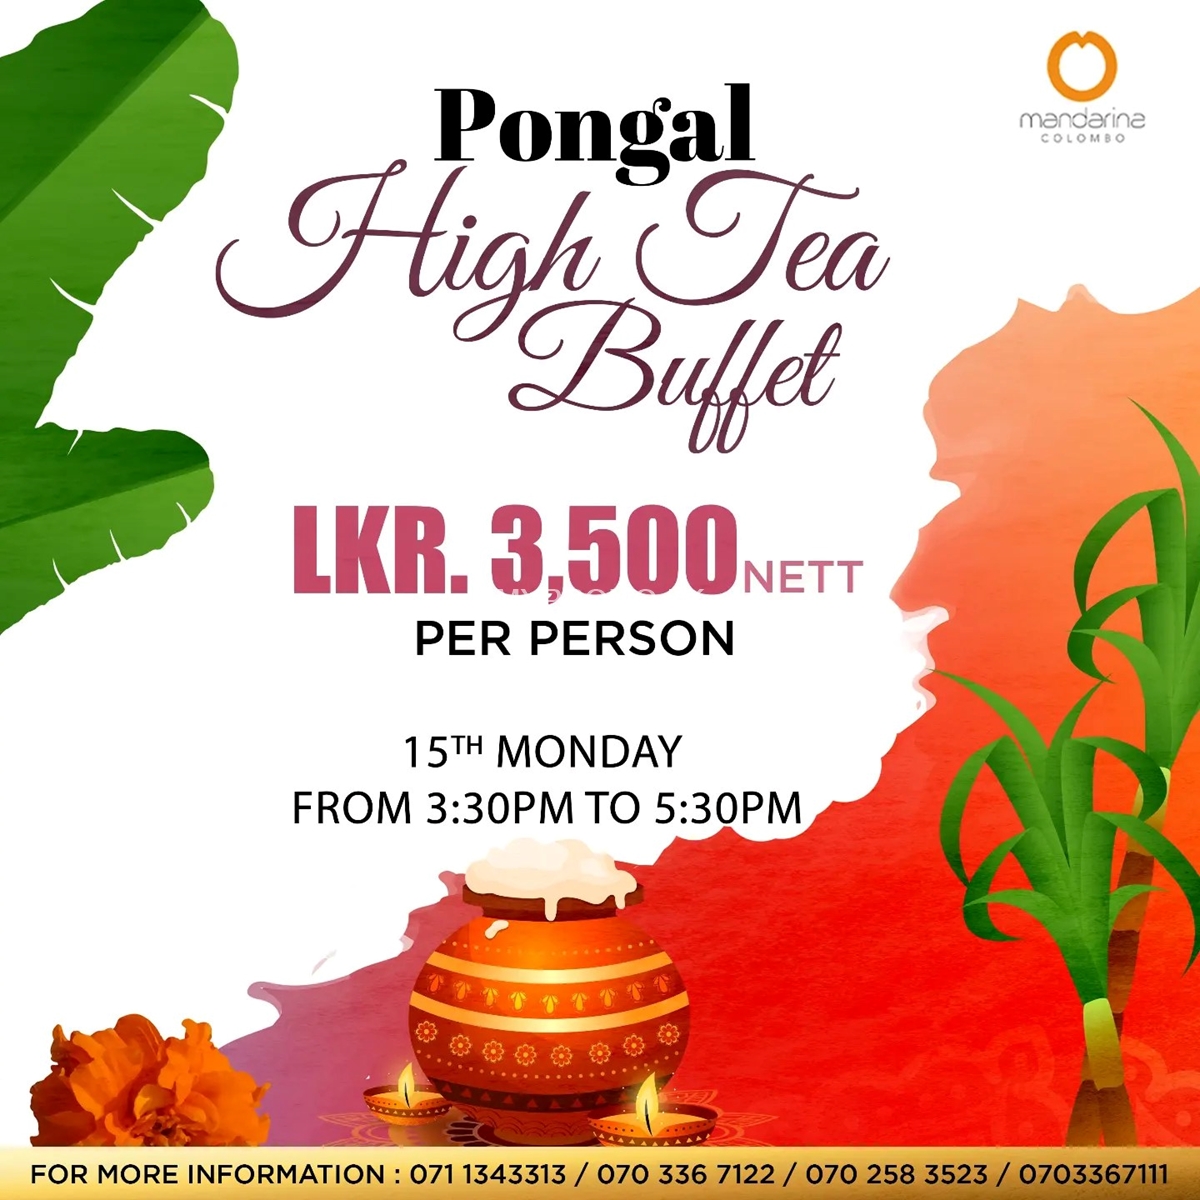 Pongal high Tea Buffet at Mandarina Colombo